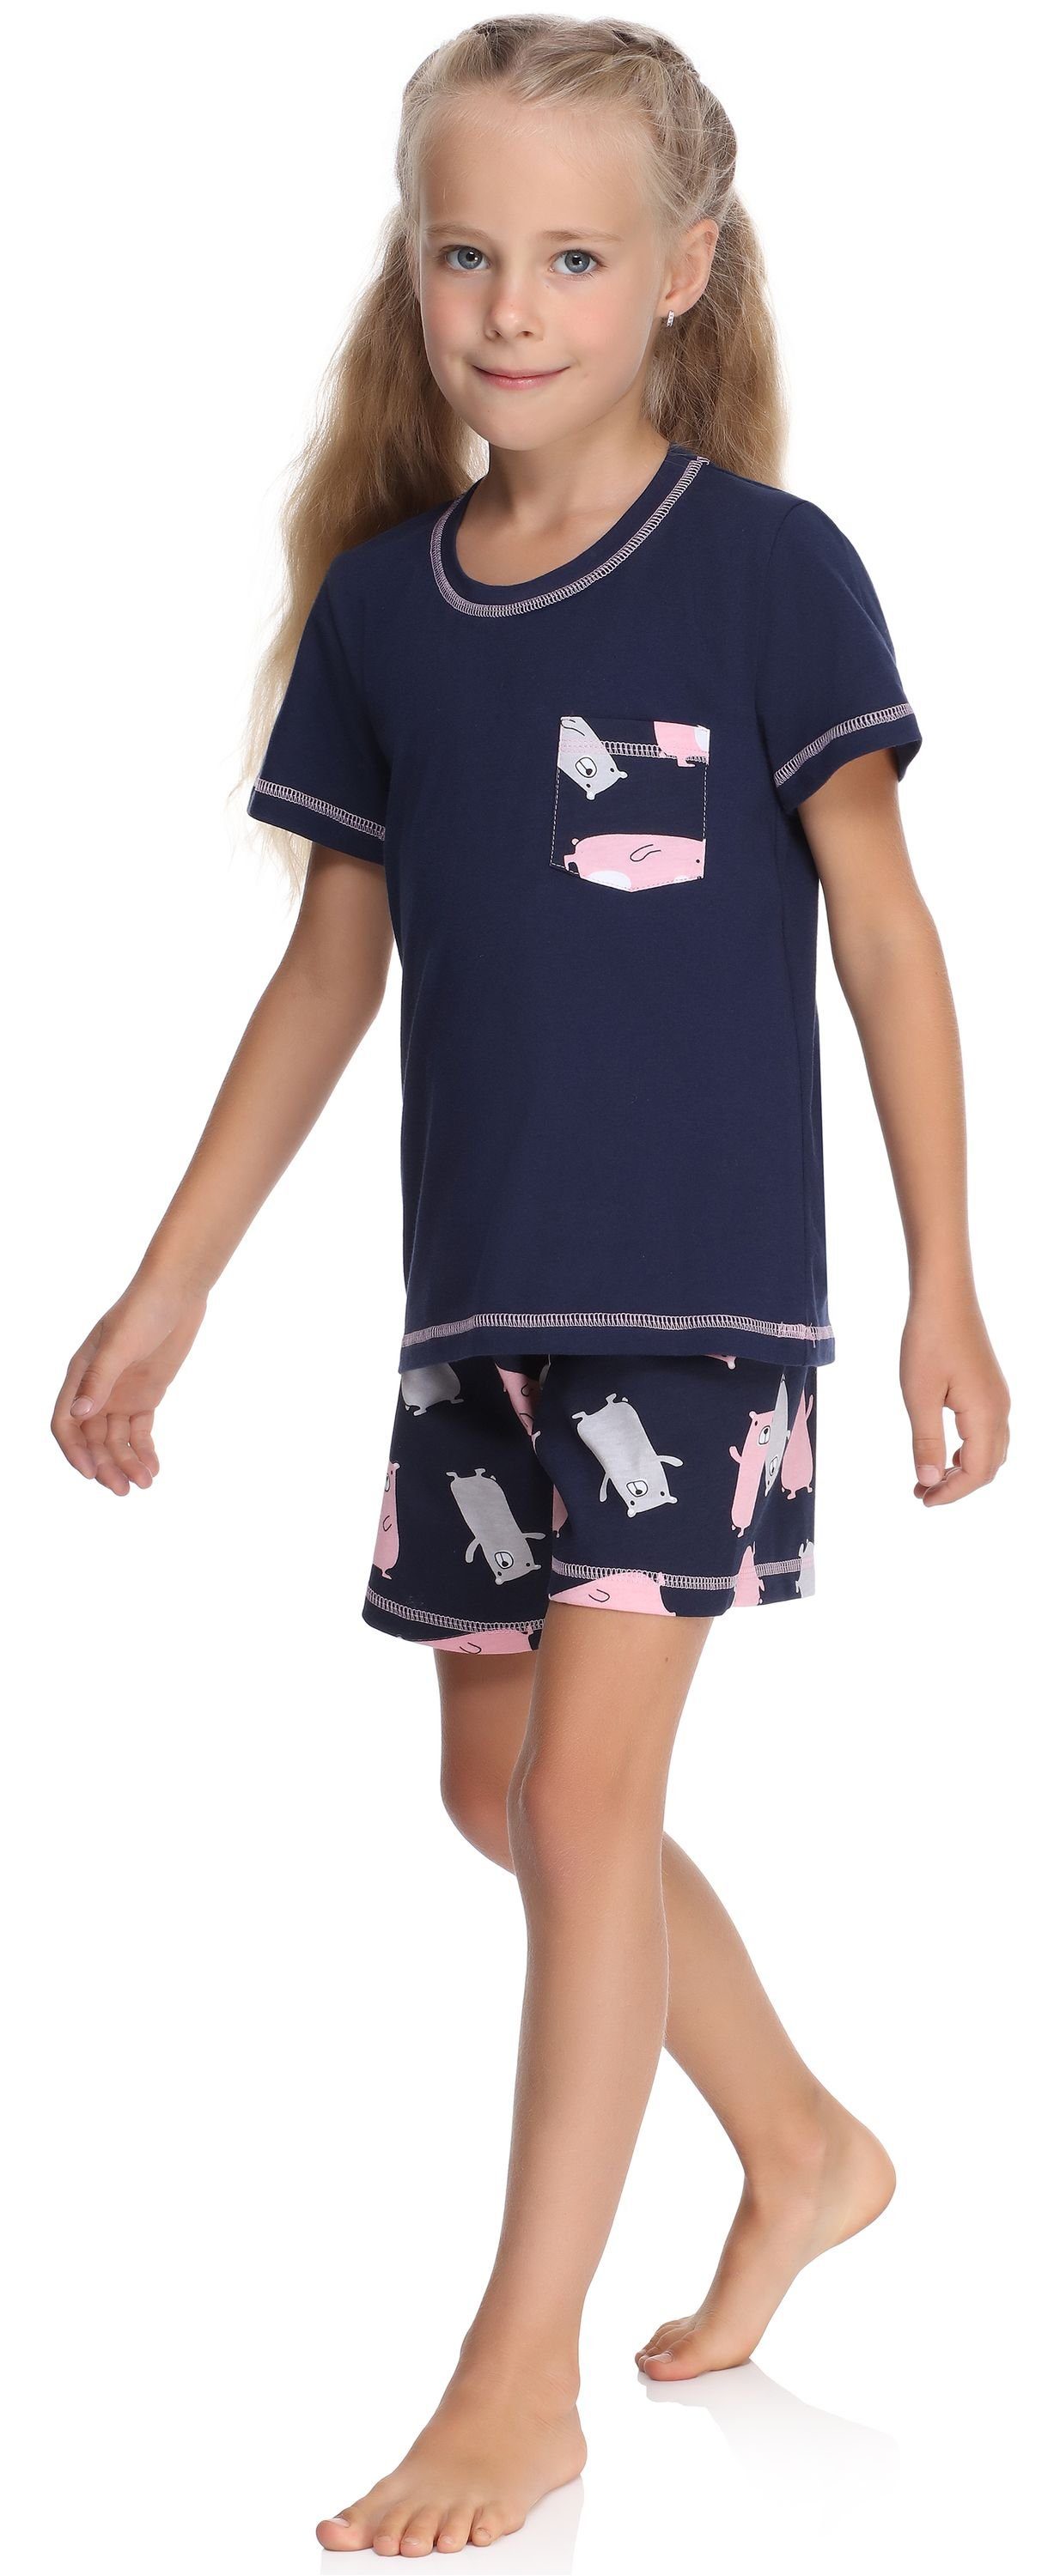 Style Marineblau/Teddybär Set Schlafanzüge Mädchen Kurz Pyjama Baumwolle Schlafanzug aus Merry MS10-292